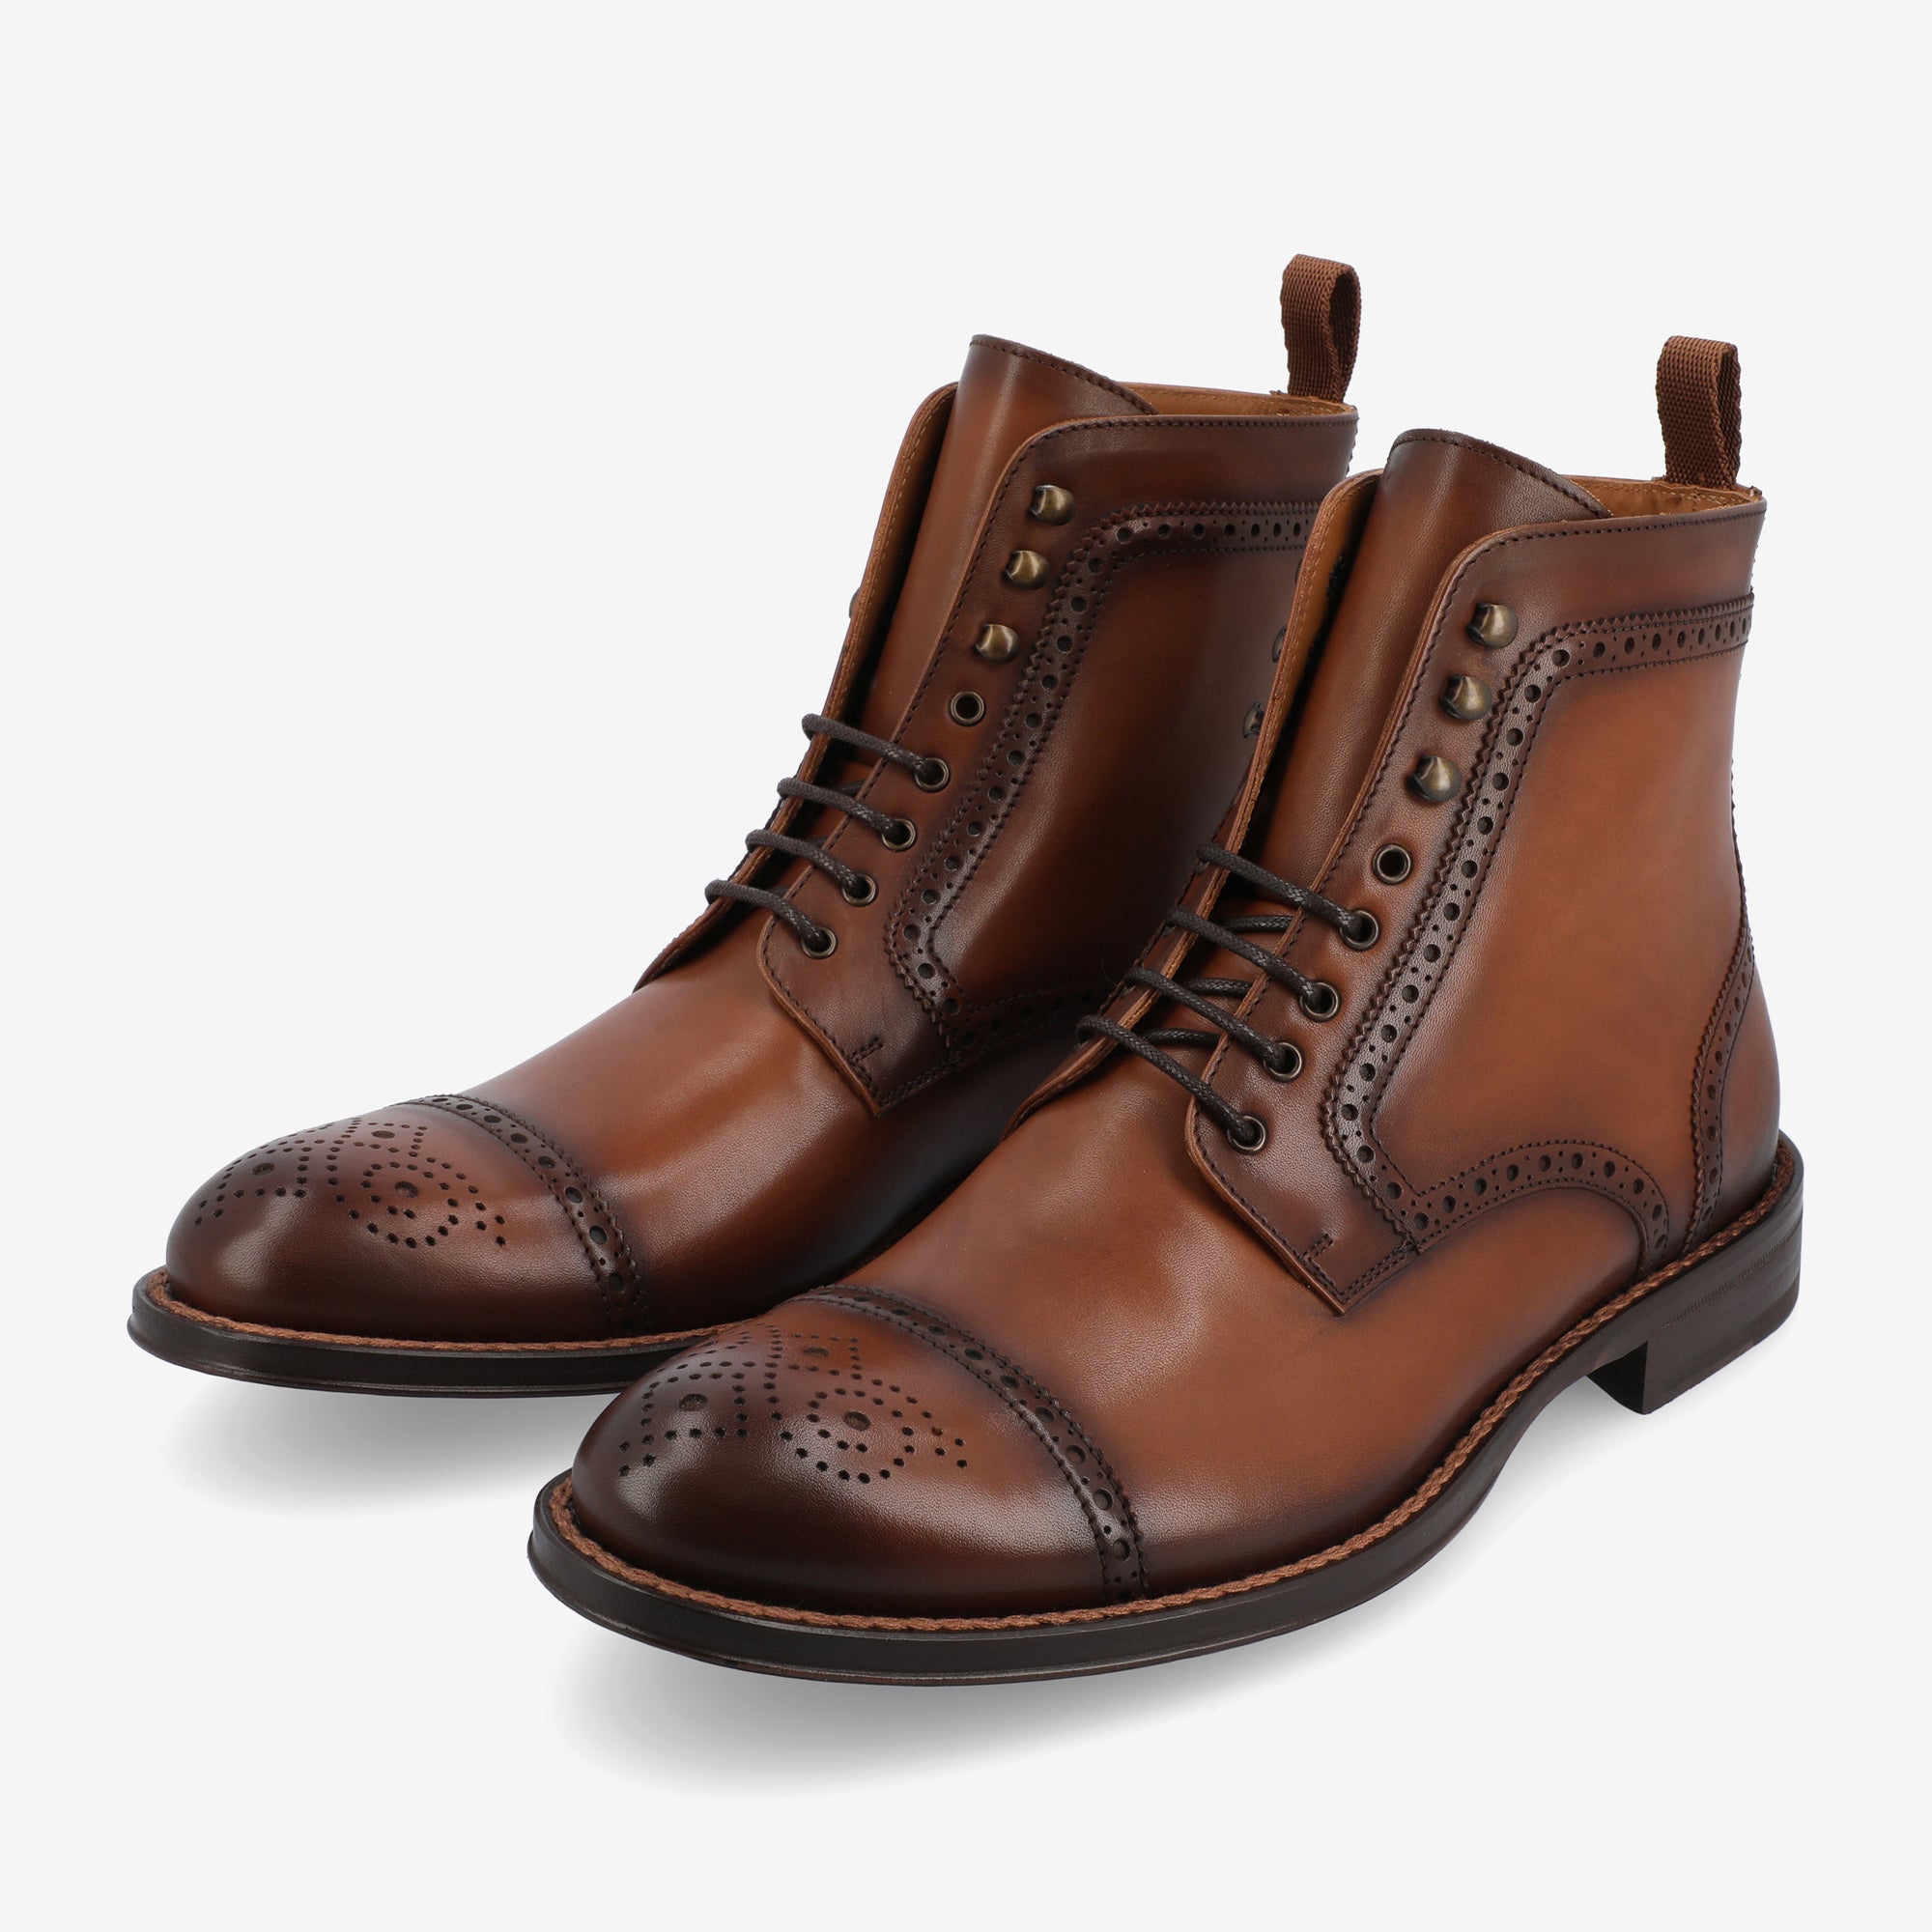 The Noah Boot in Brown